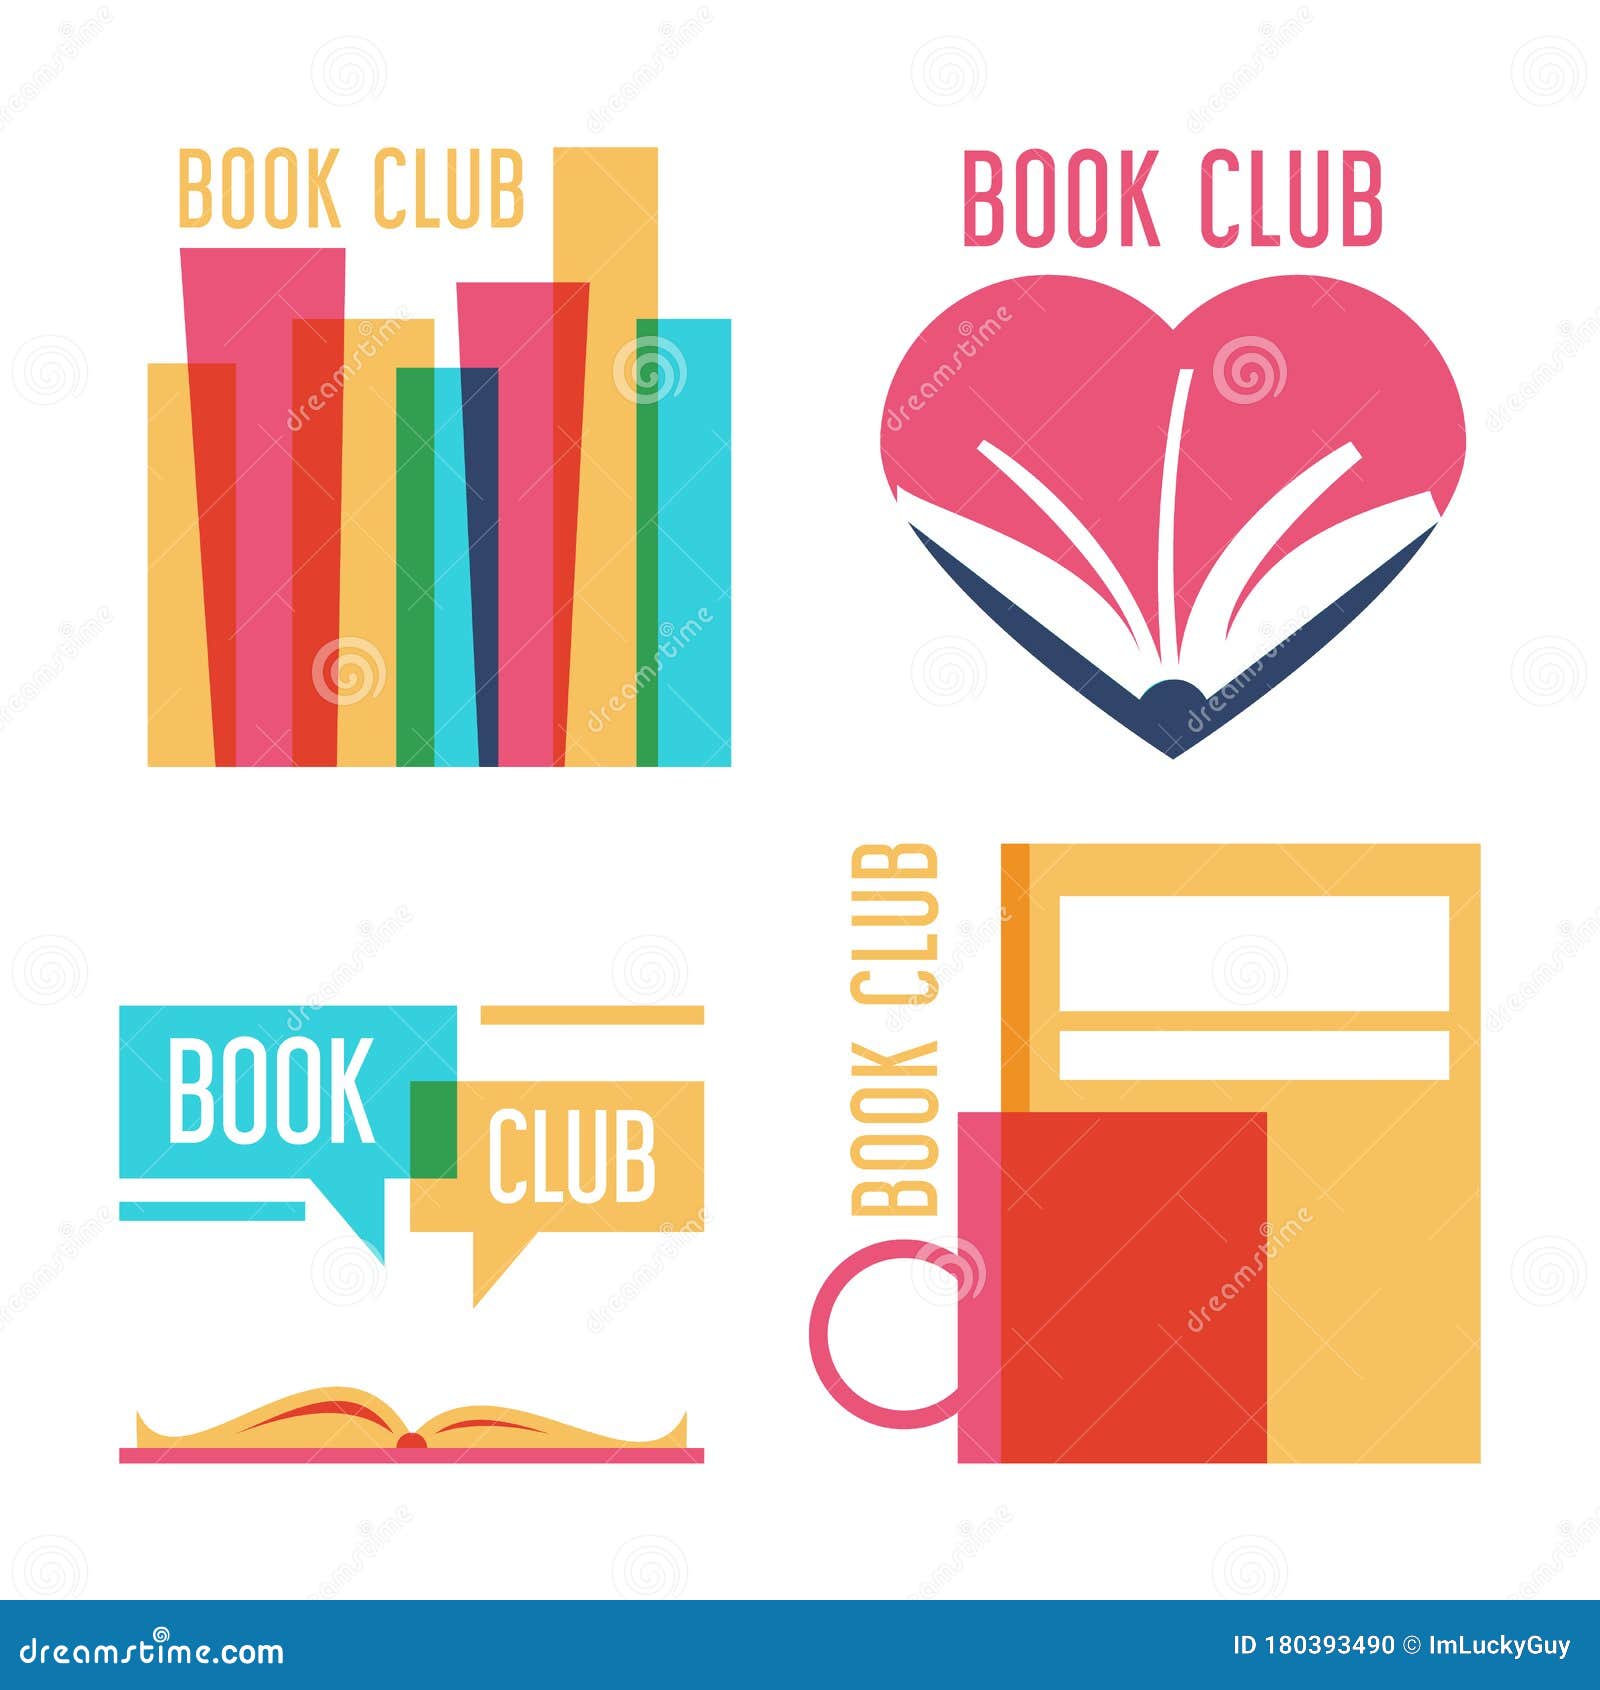 book club logo ideas 1